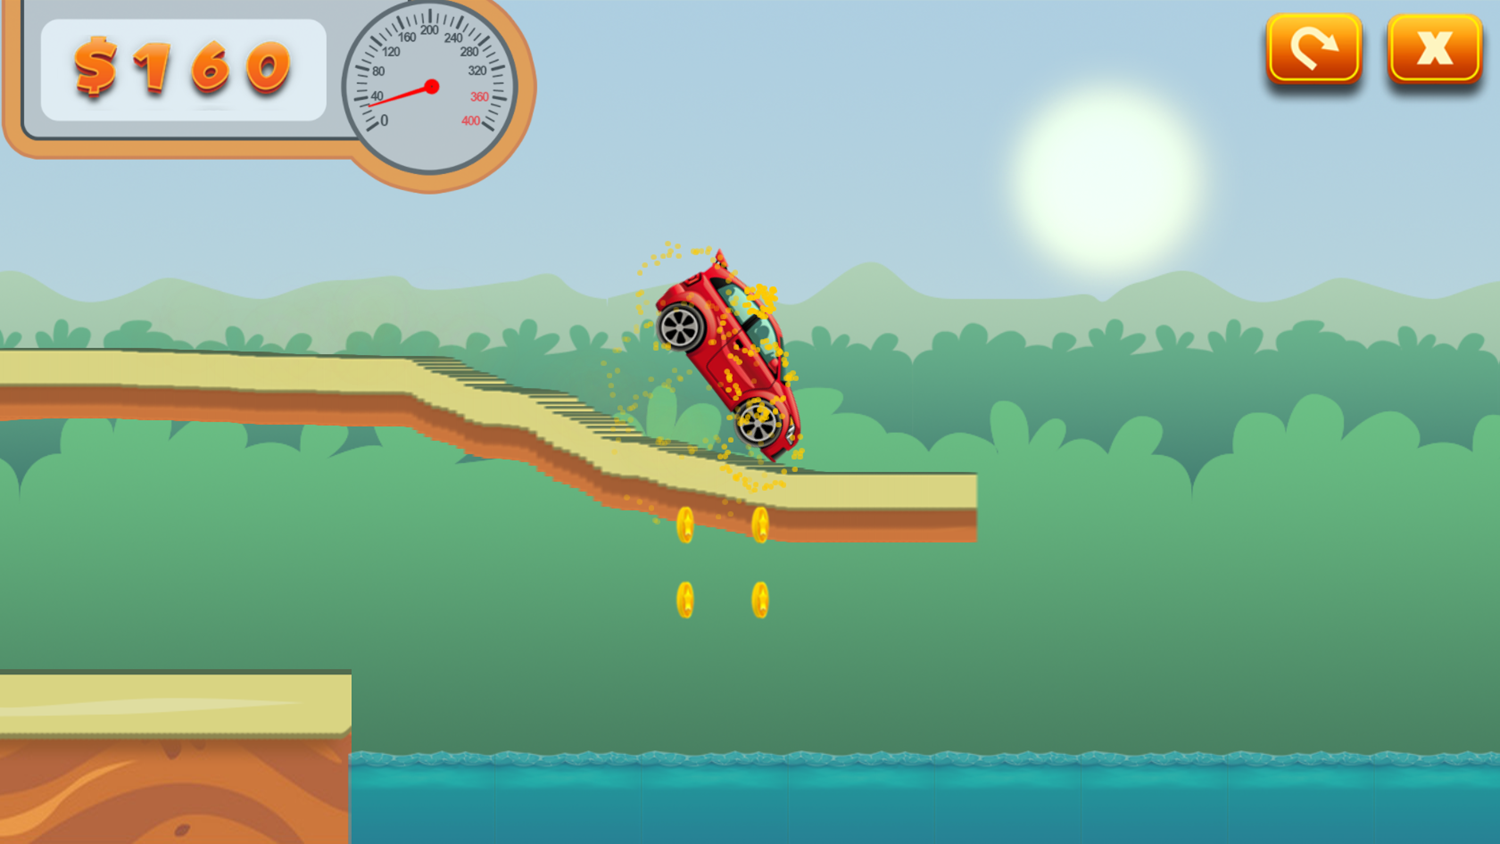 Fun Racer Drawing Path Game Level Play Screenshot.